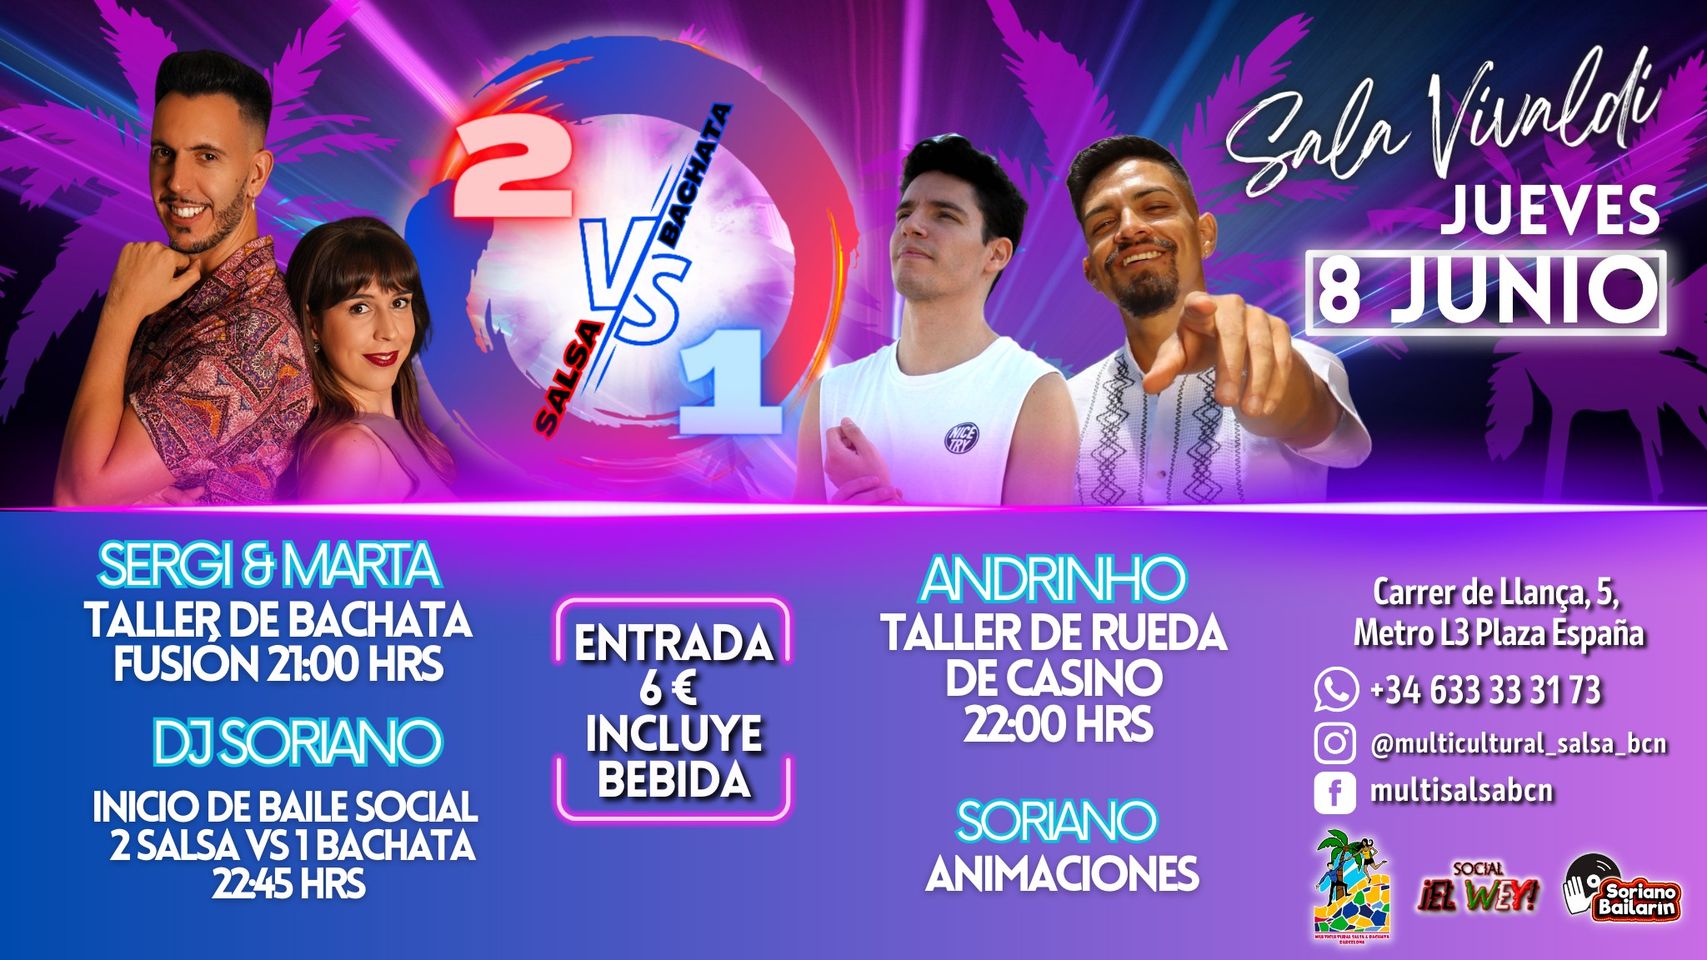 Salsa vs Bachata (2vs1), Talleres de Bachata, Rueda Cubana + Baile Social, ahora también los Jueves